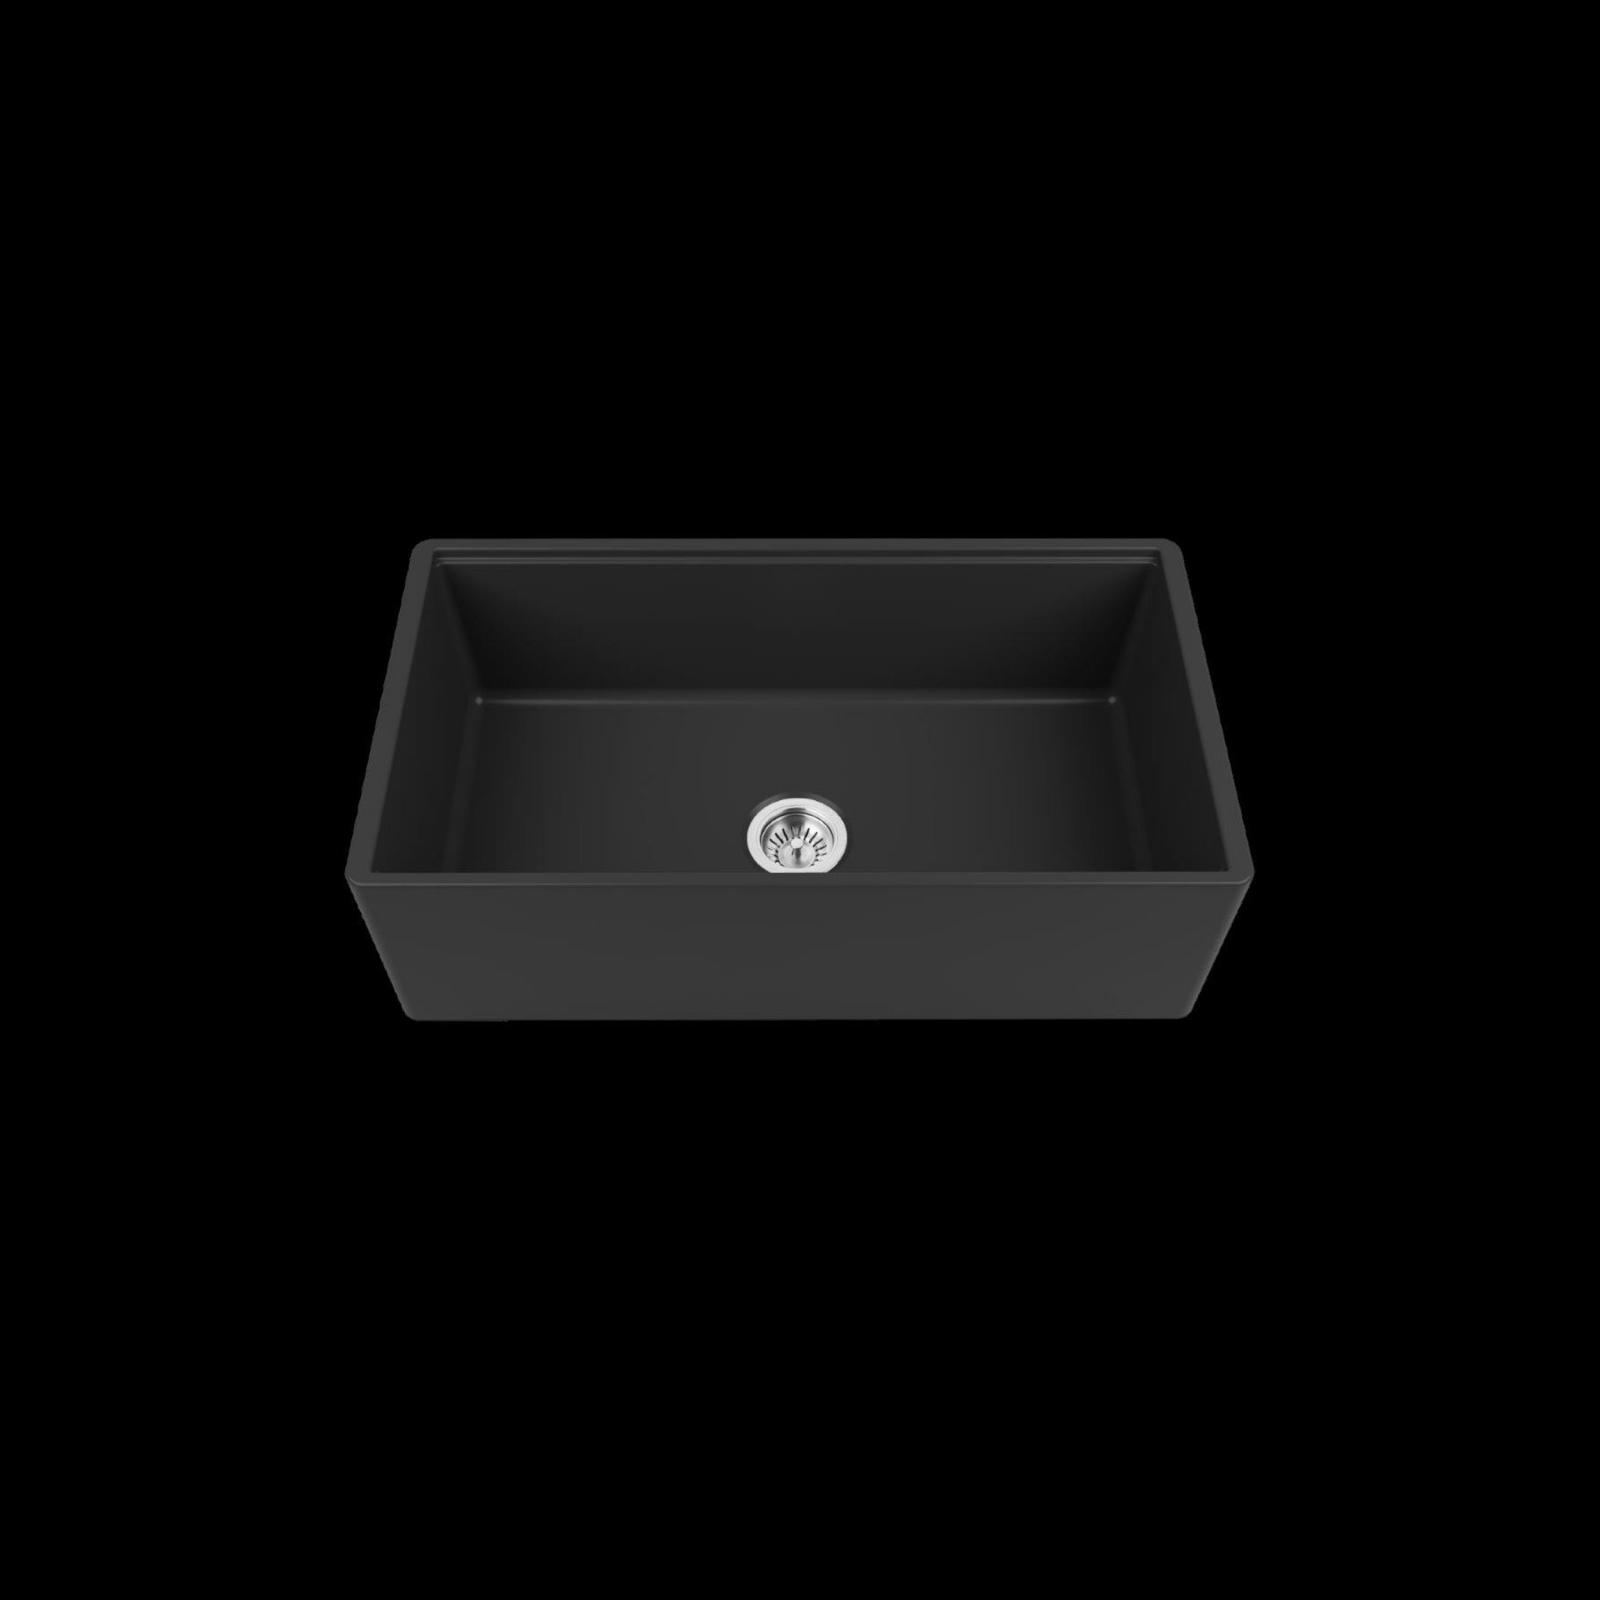 High-quality sink Louis Le Grand III black - single bowl, ceramic - 2